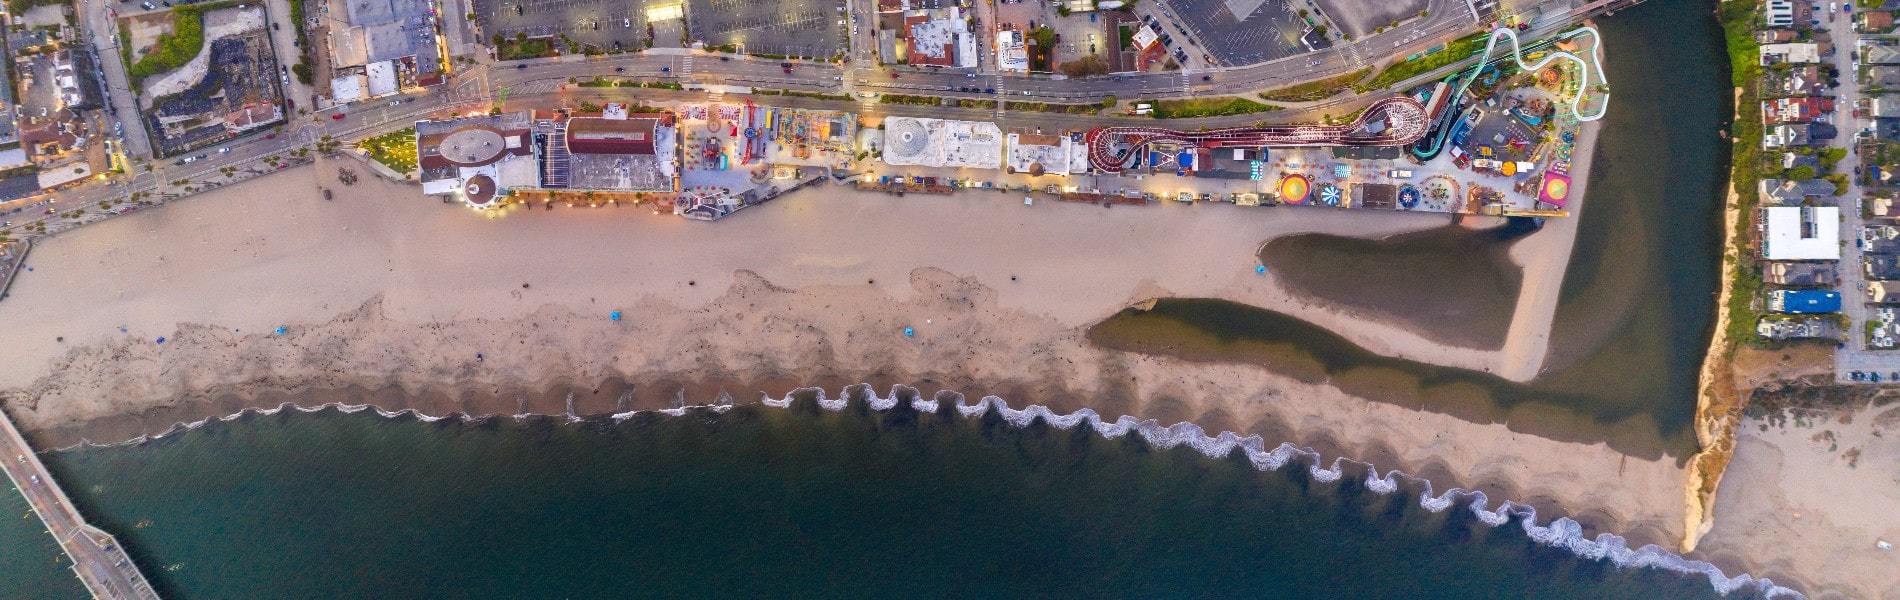 Aerial view overlooking iconic Santa Cruz Beach Boardwalk